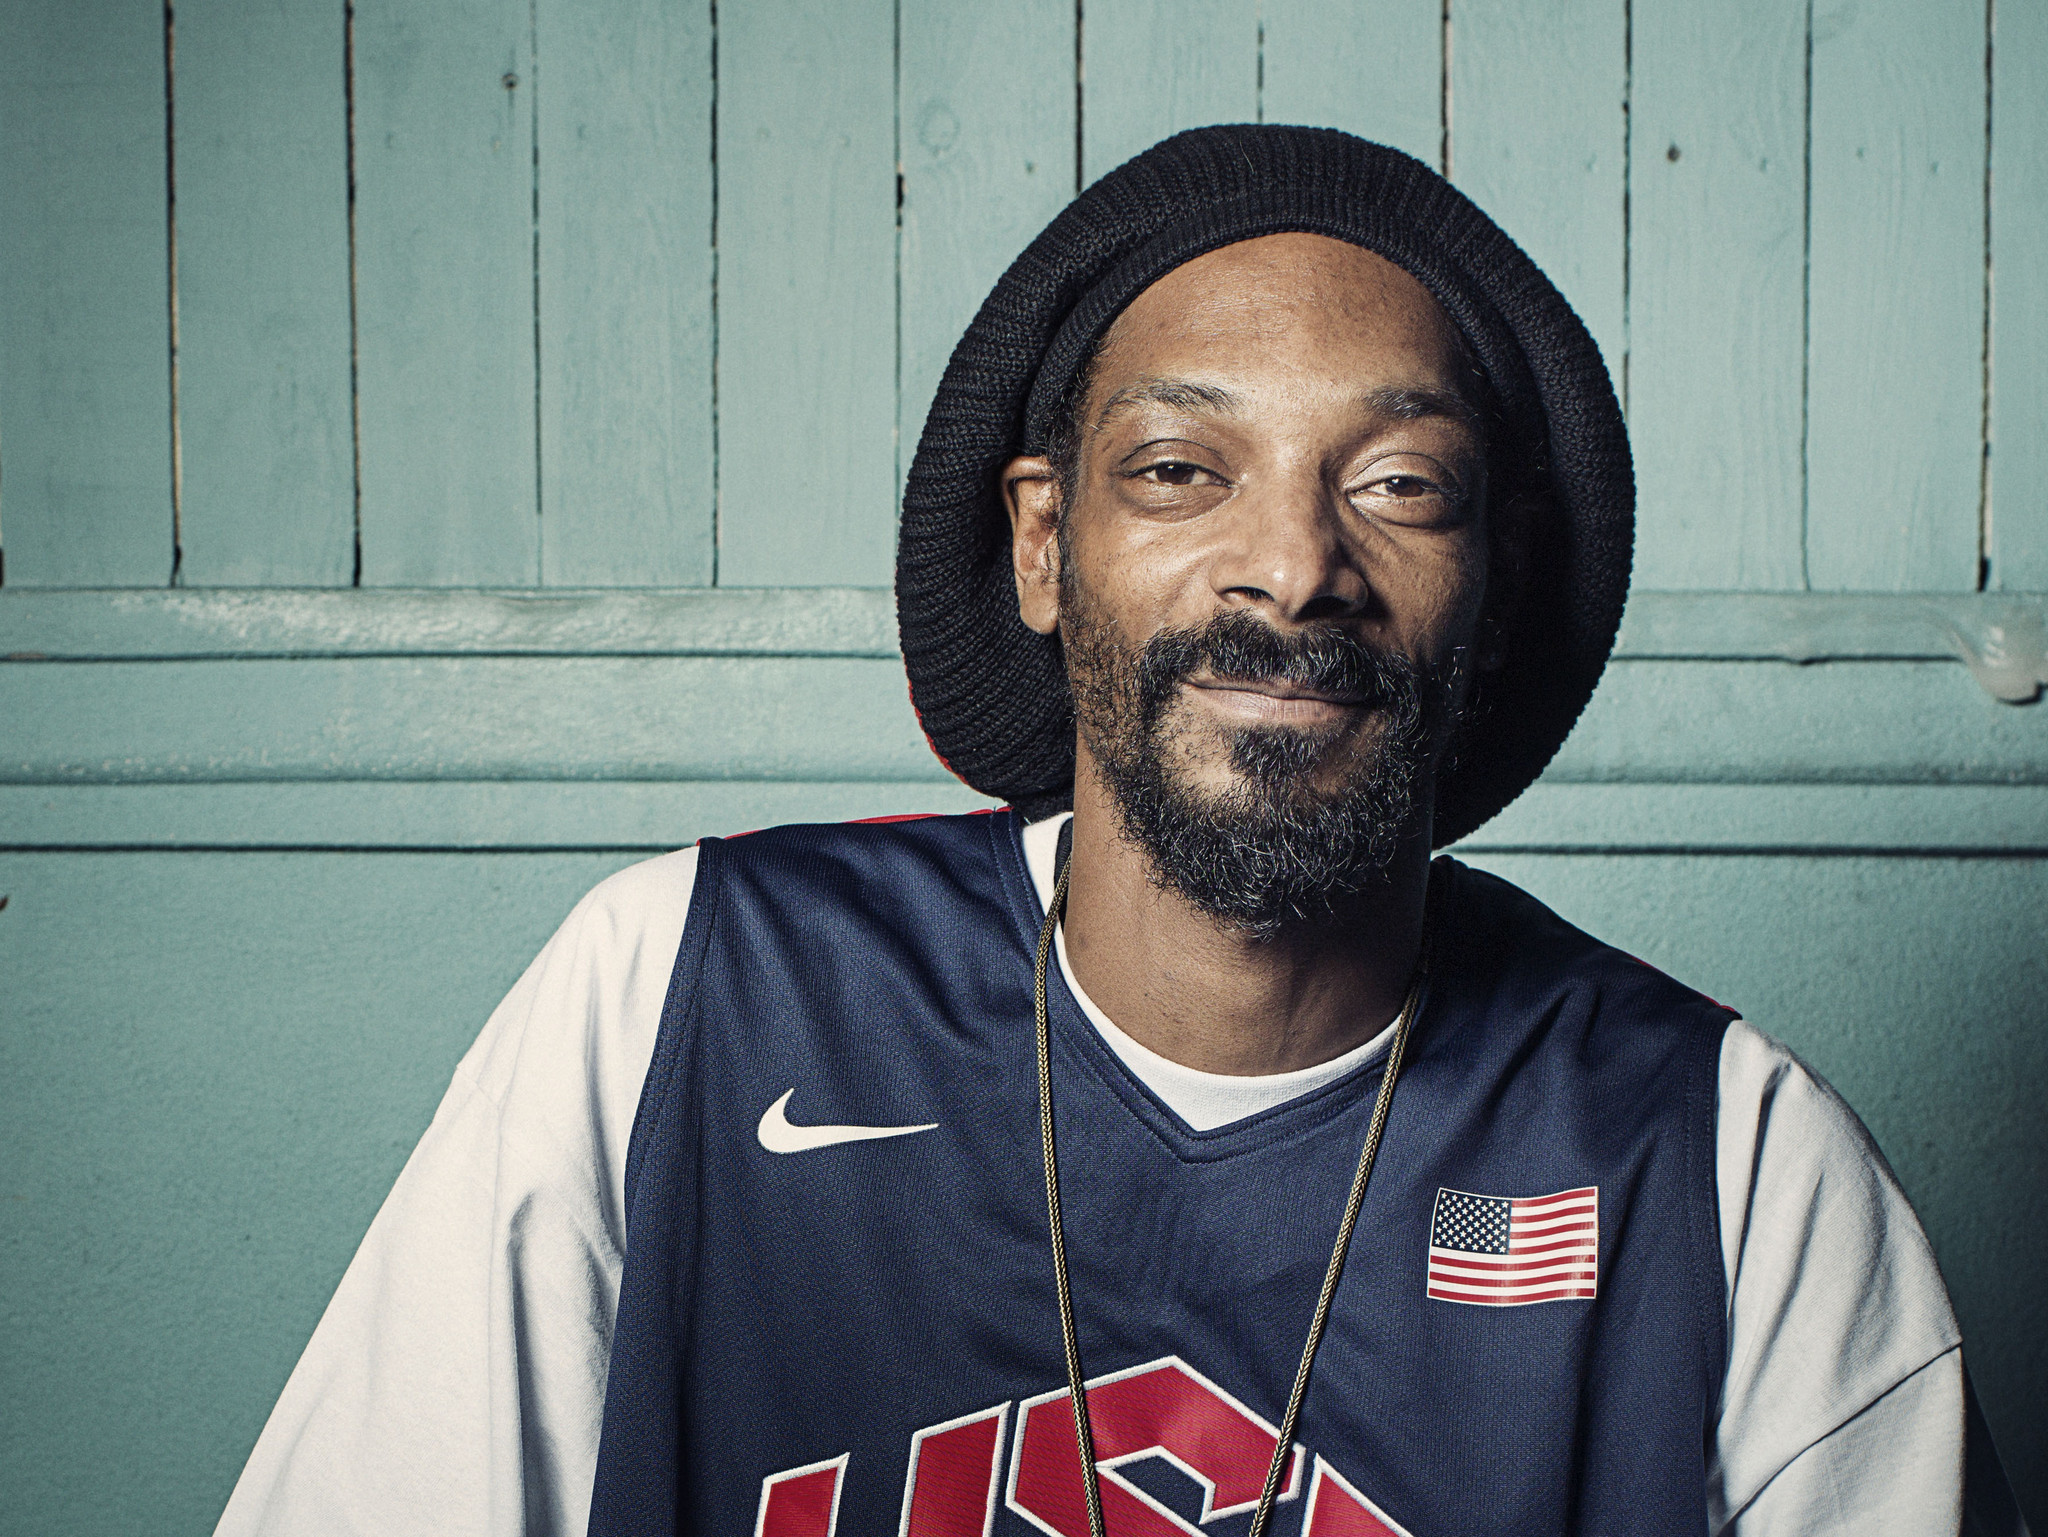 Snoop Dogg named keynote speaker for South By Southwest fest